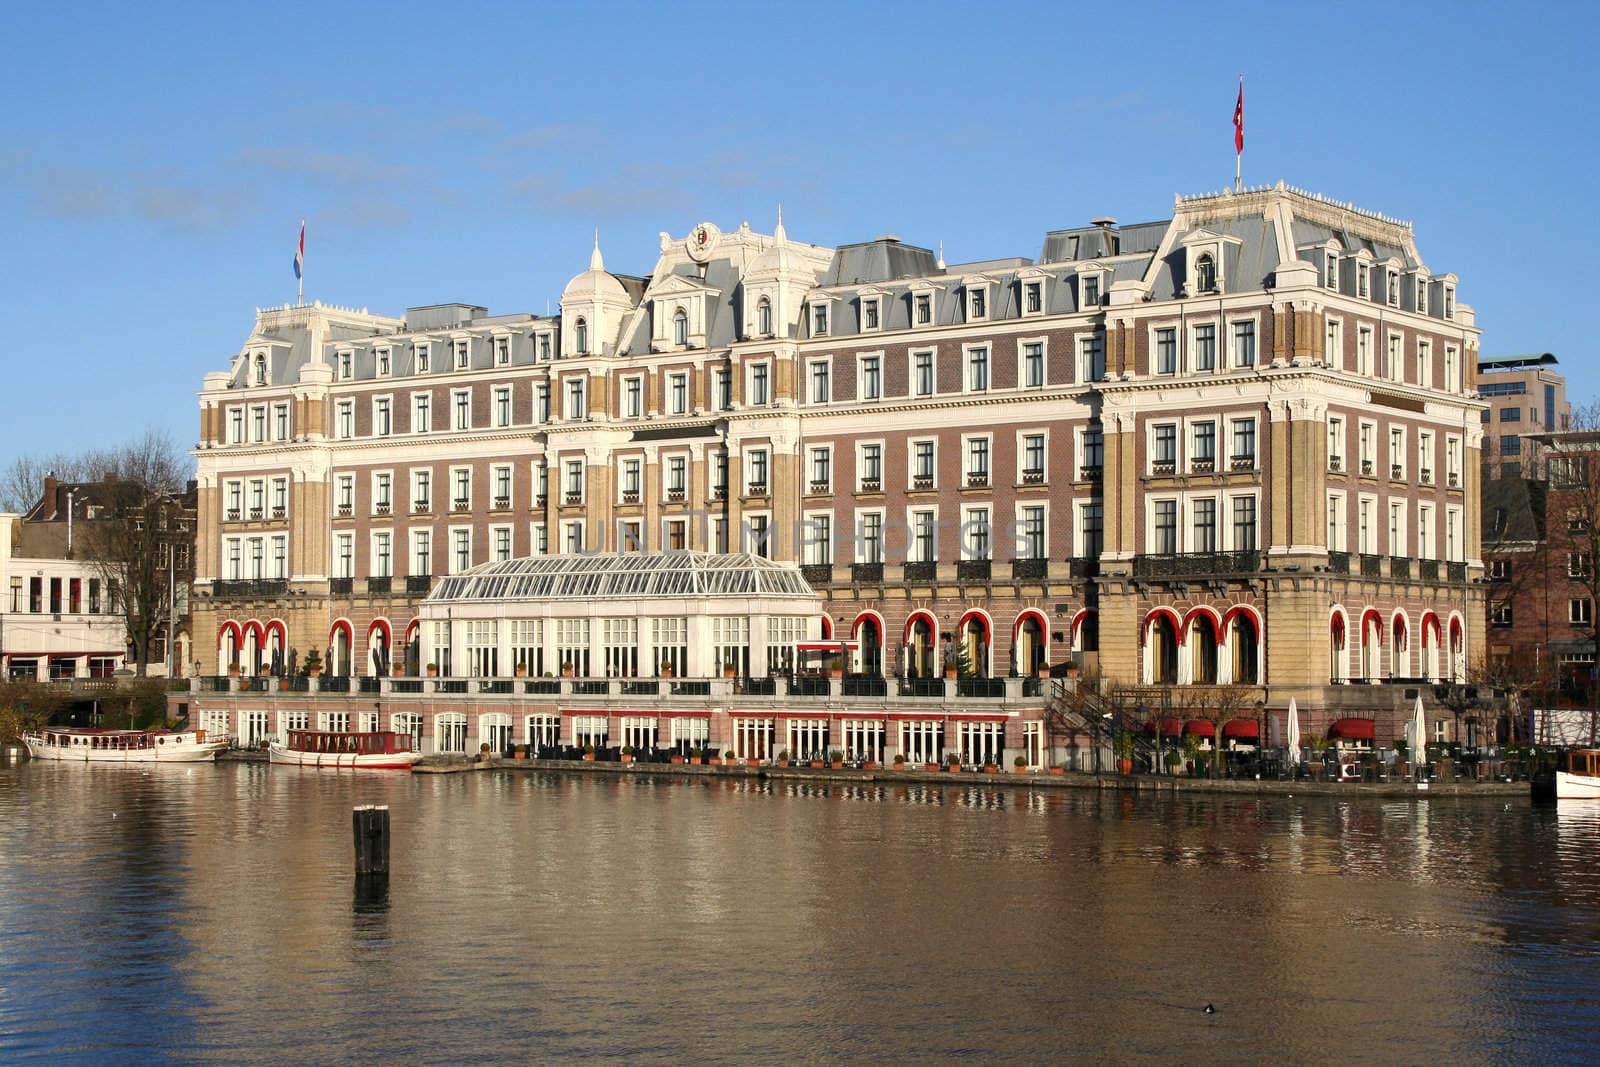 Amsterdam Hotel by JanKranendonk